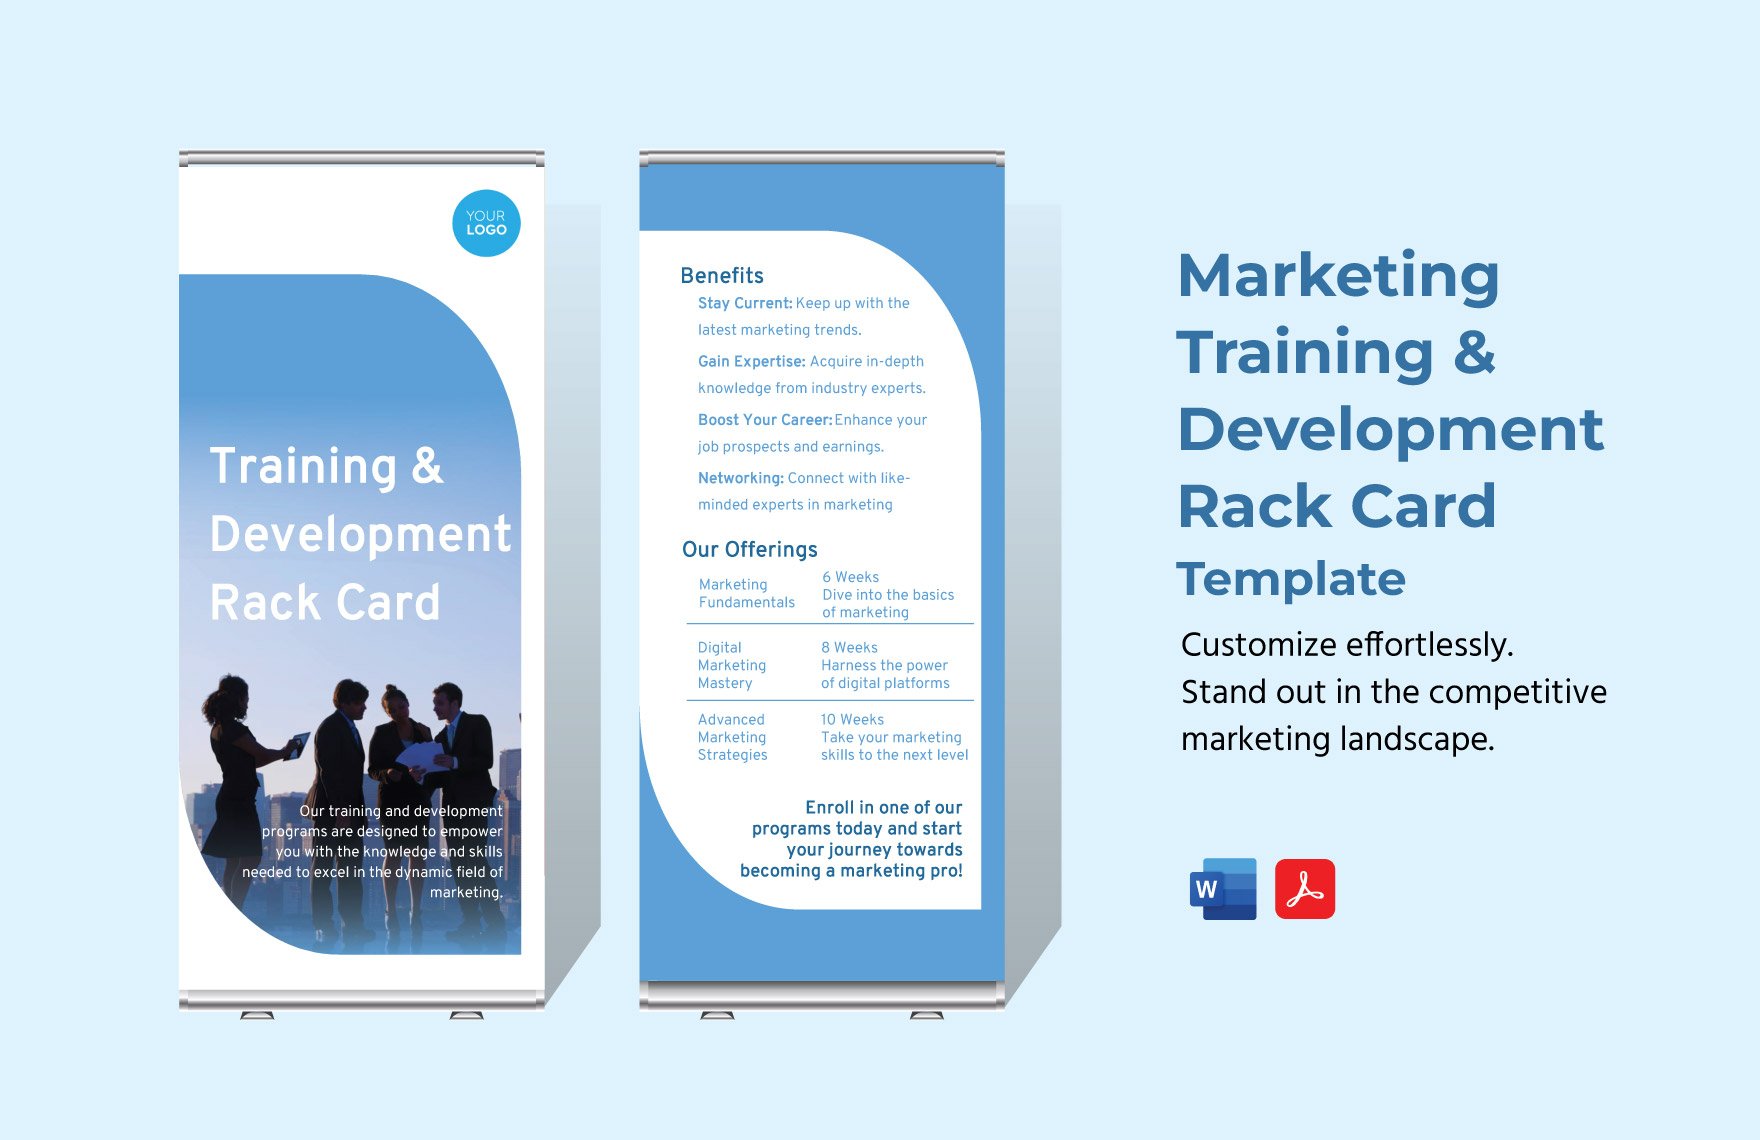 Marketing Training & Development Rack Card Template